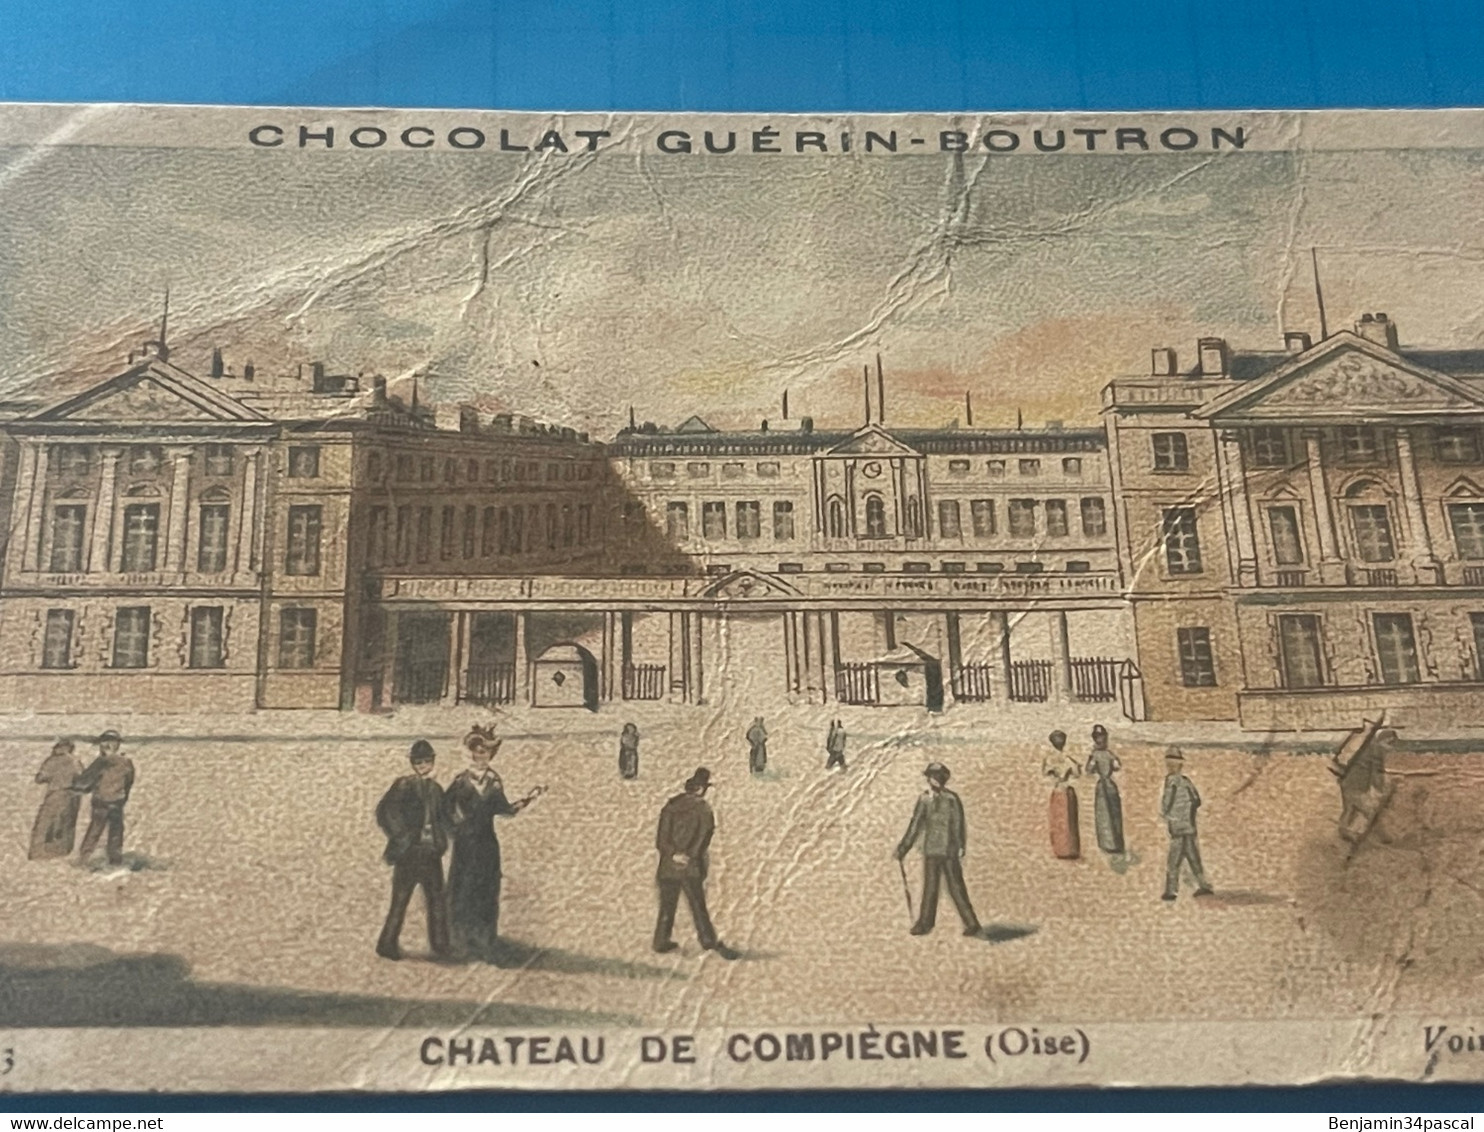 Chocolat GUÉRIN-BOUTRON Image -Chromo Ancienne - Château De Compiegne (Oise) - Chocolat